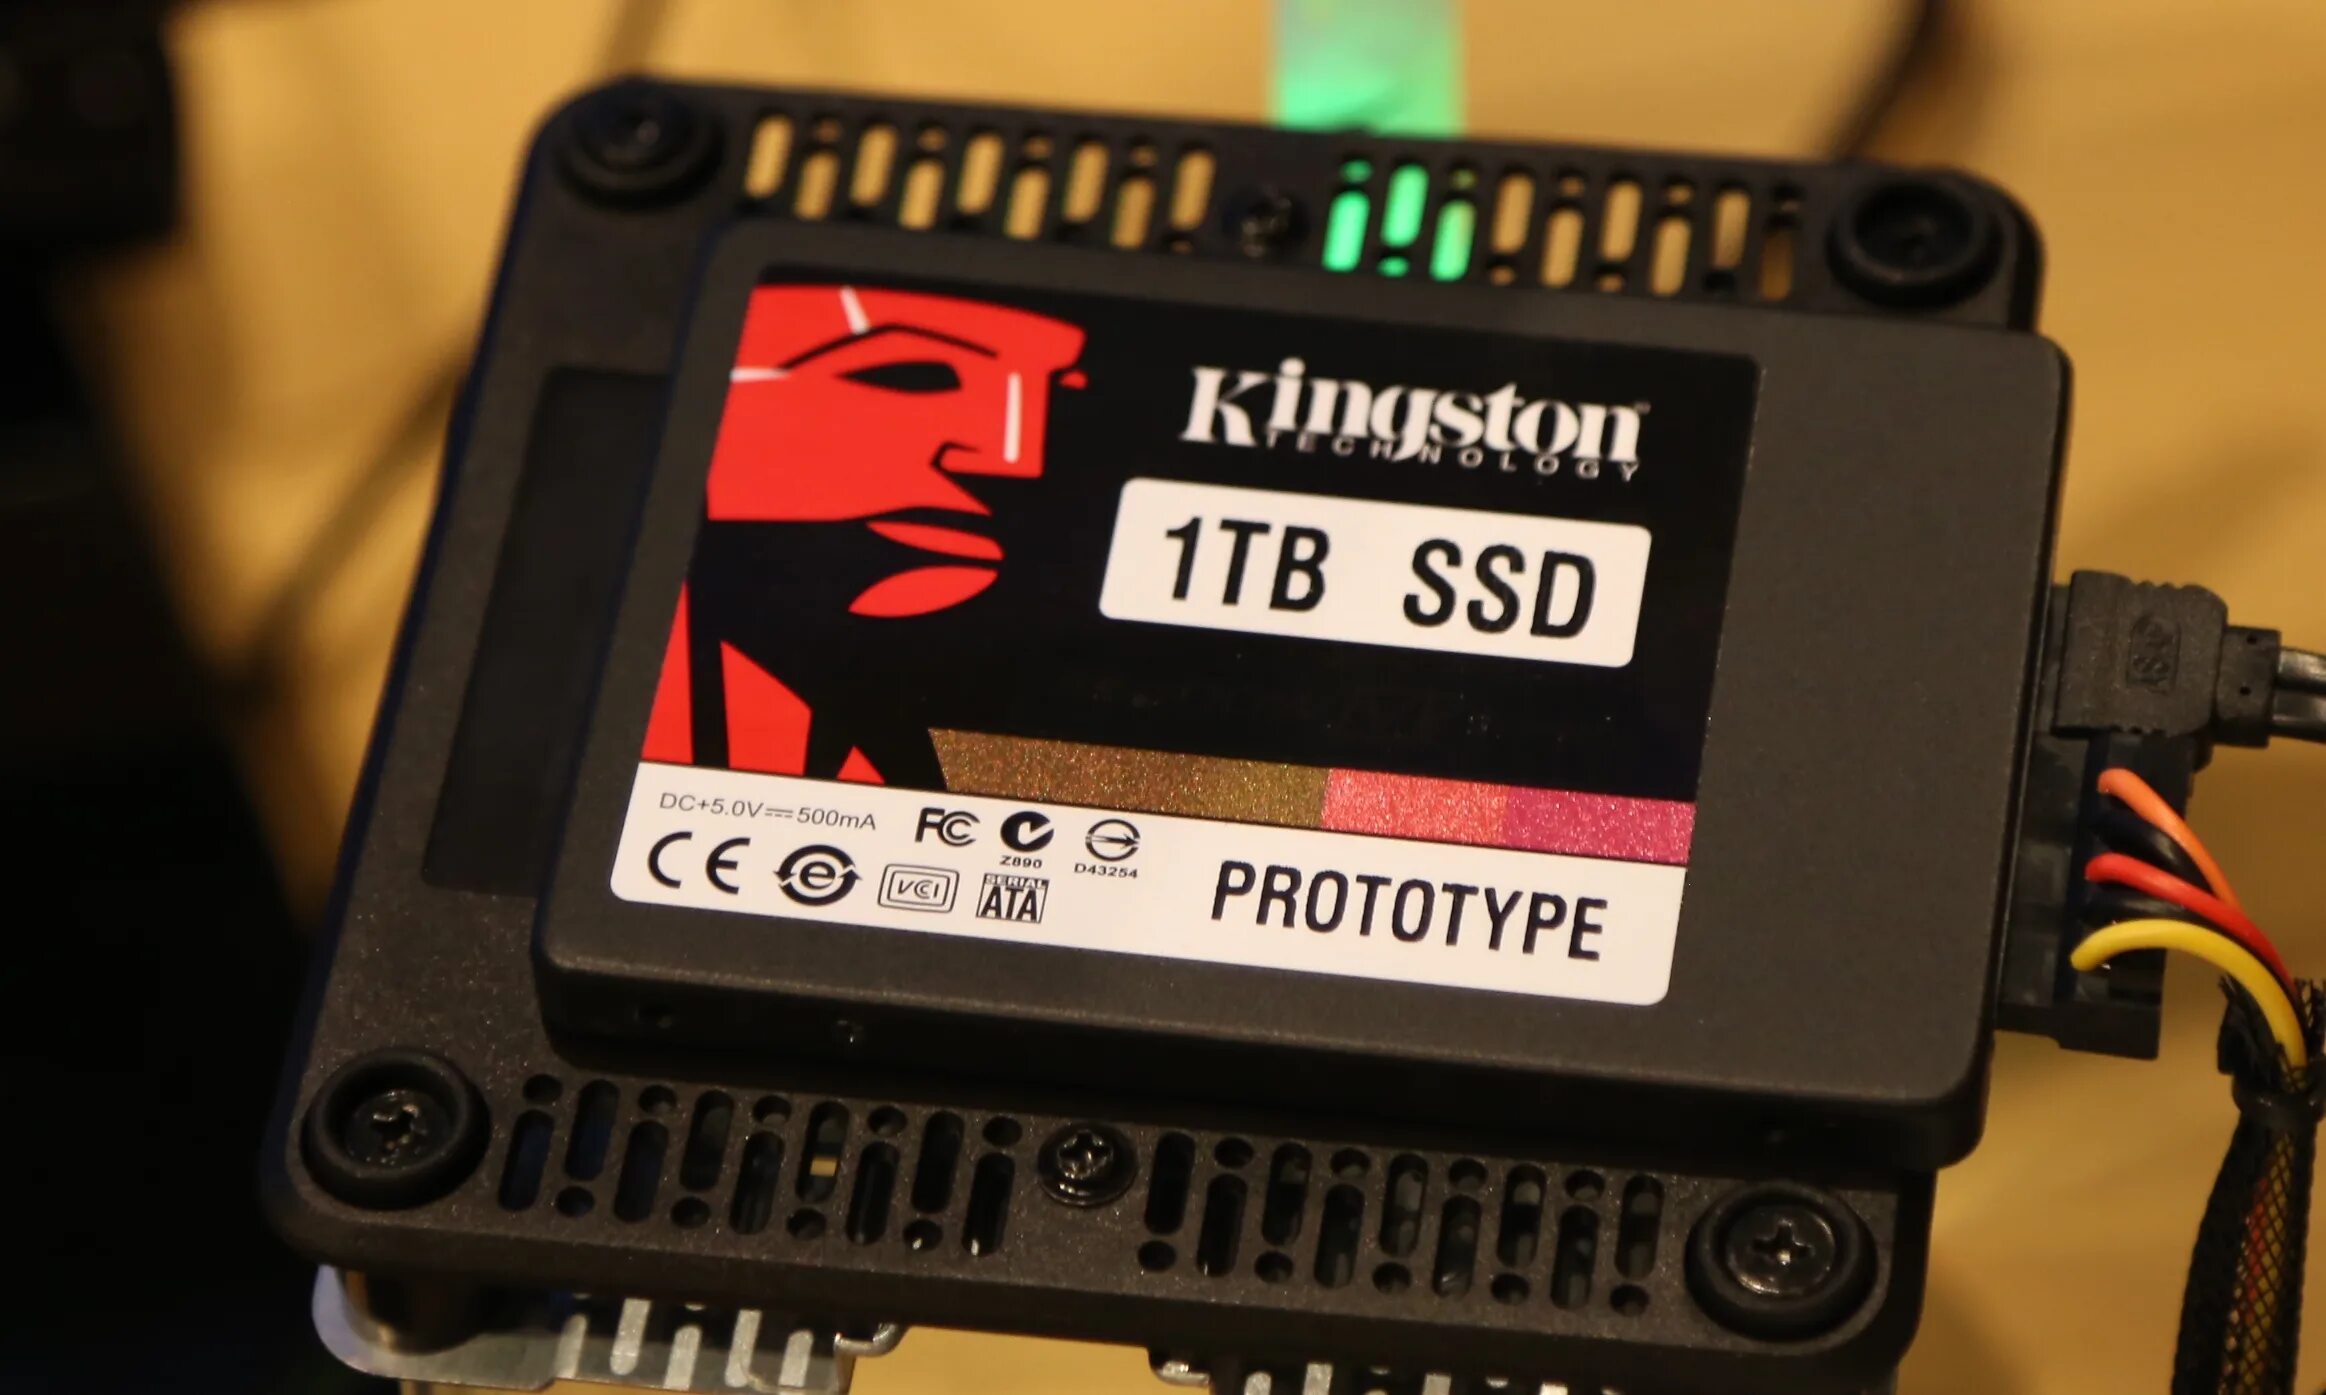 SSD Kingston 1tb. Kingston SSD 1tb 2.5. Kingston 2 TB SSD 2". Kingston SSD 1 TB m2 SATA.